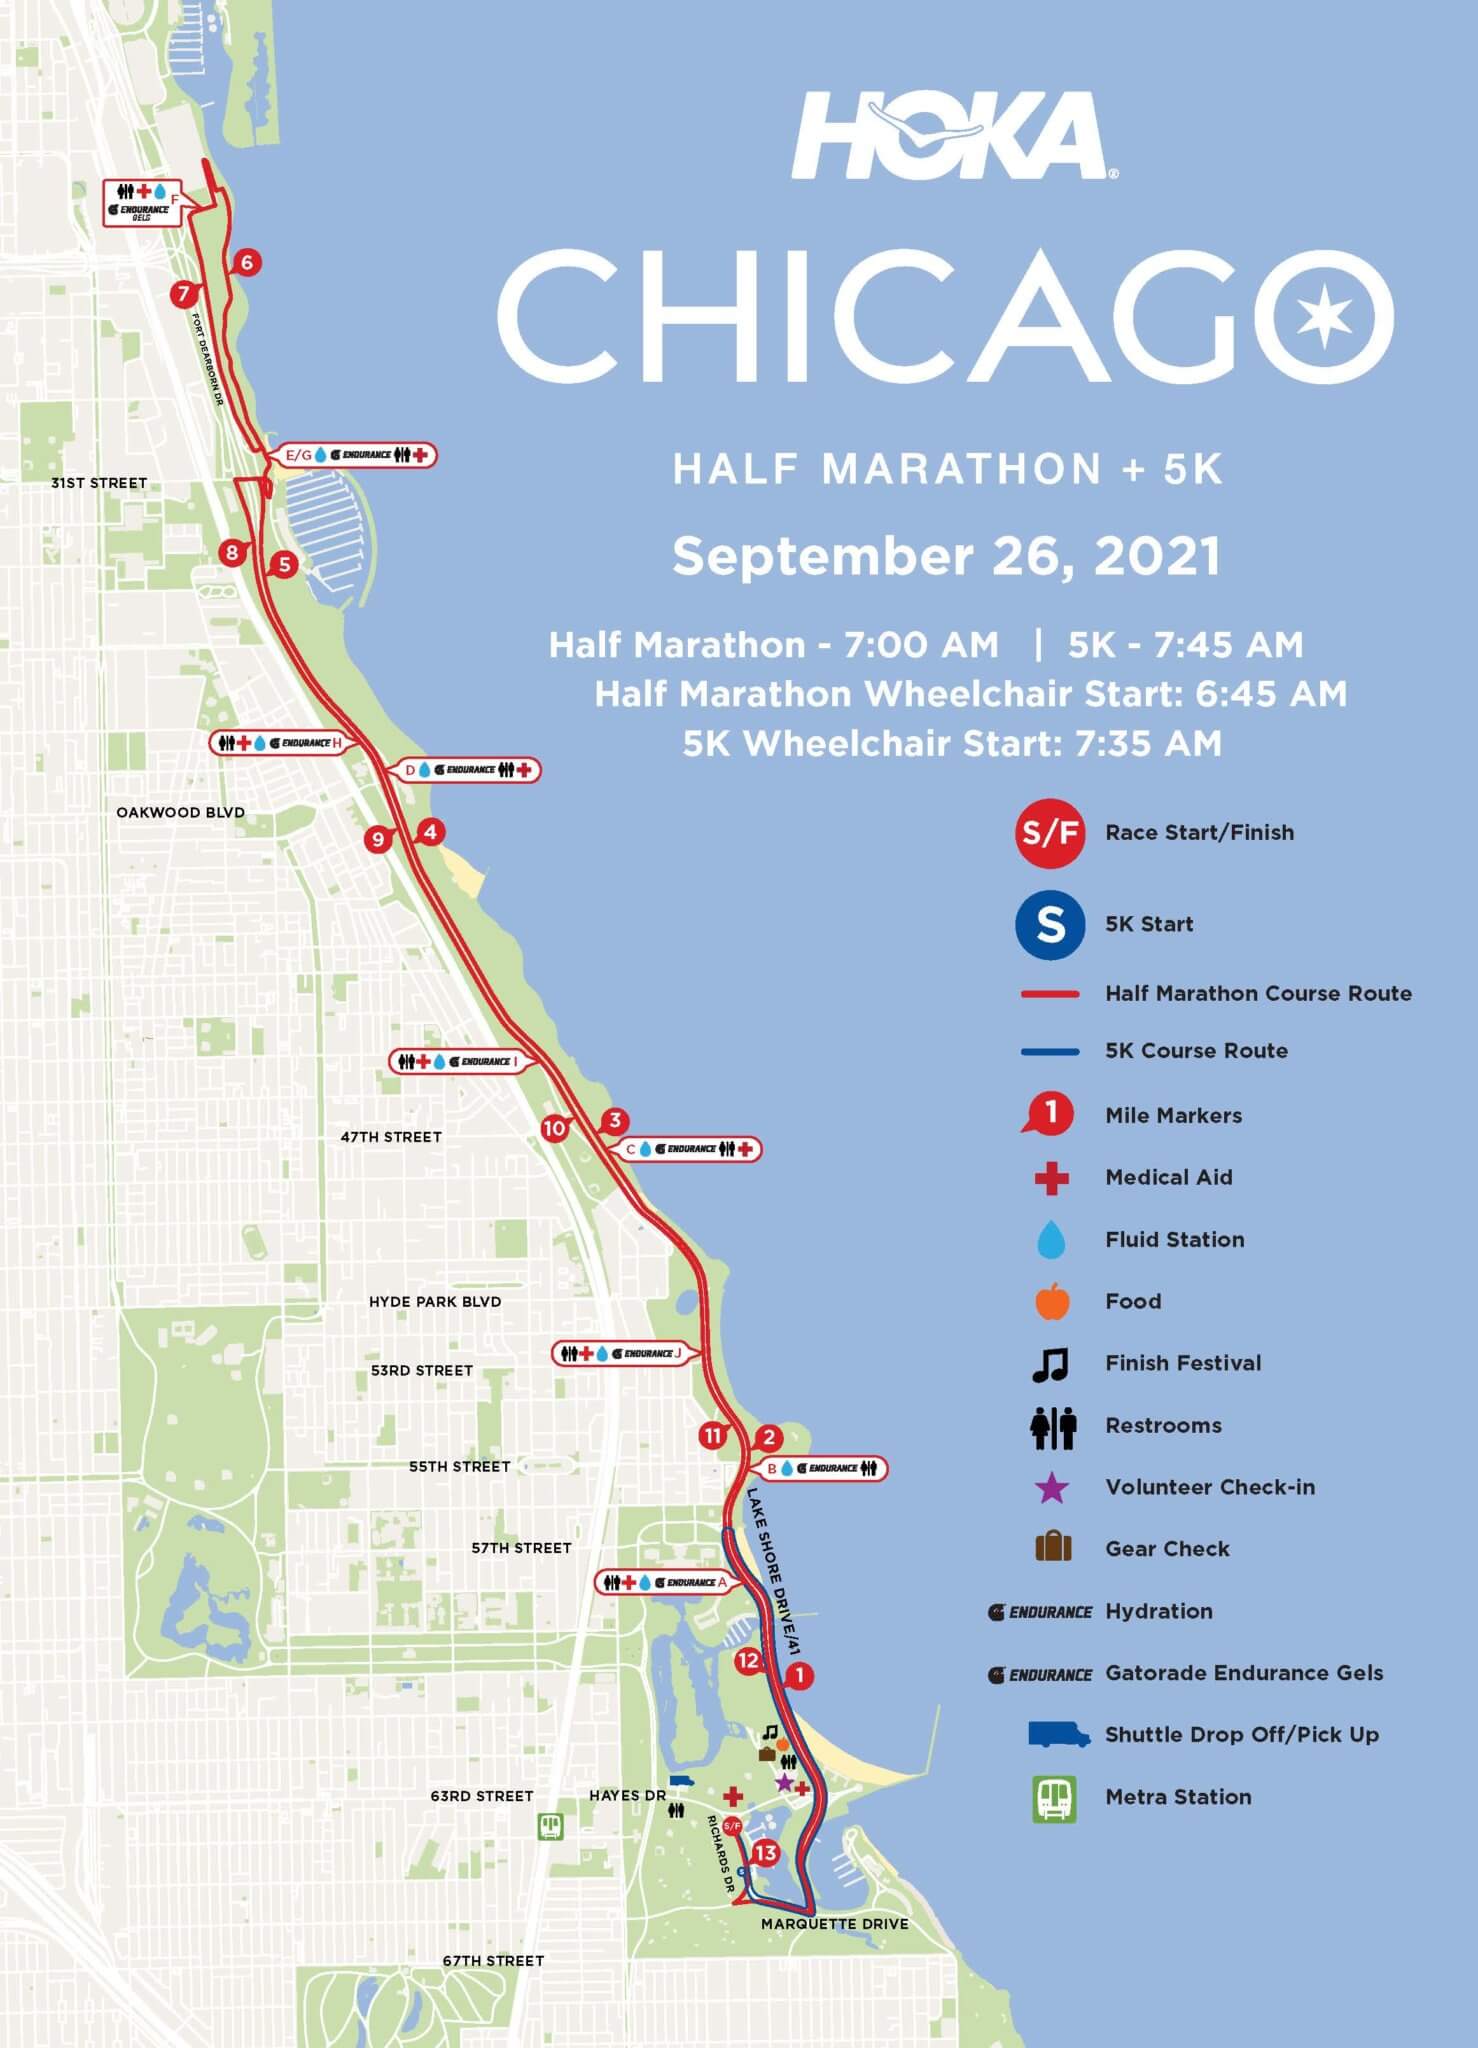 Hoka Chicago half marathon r/running